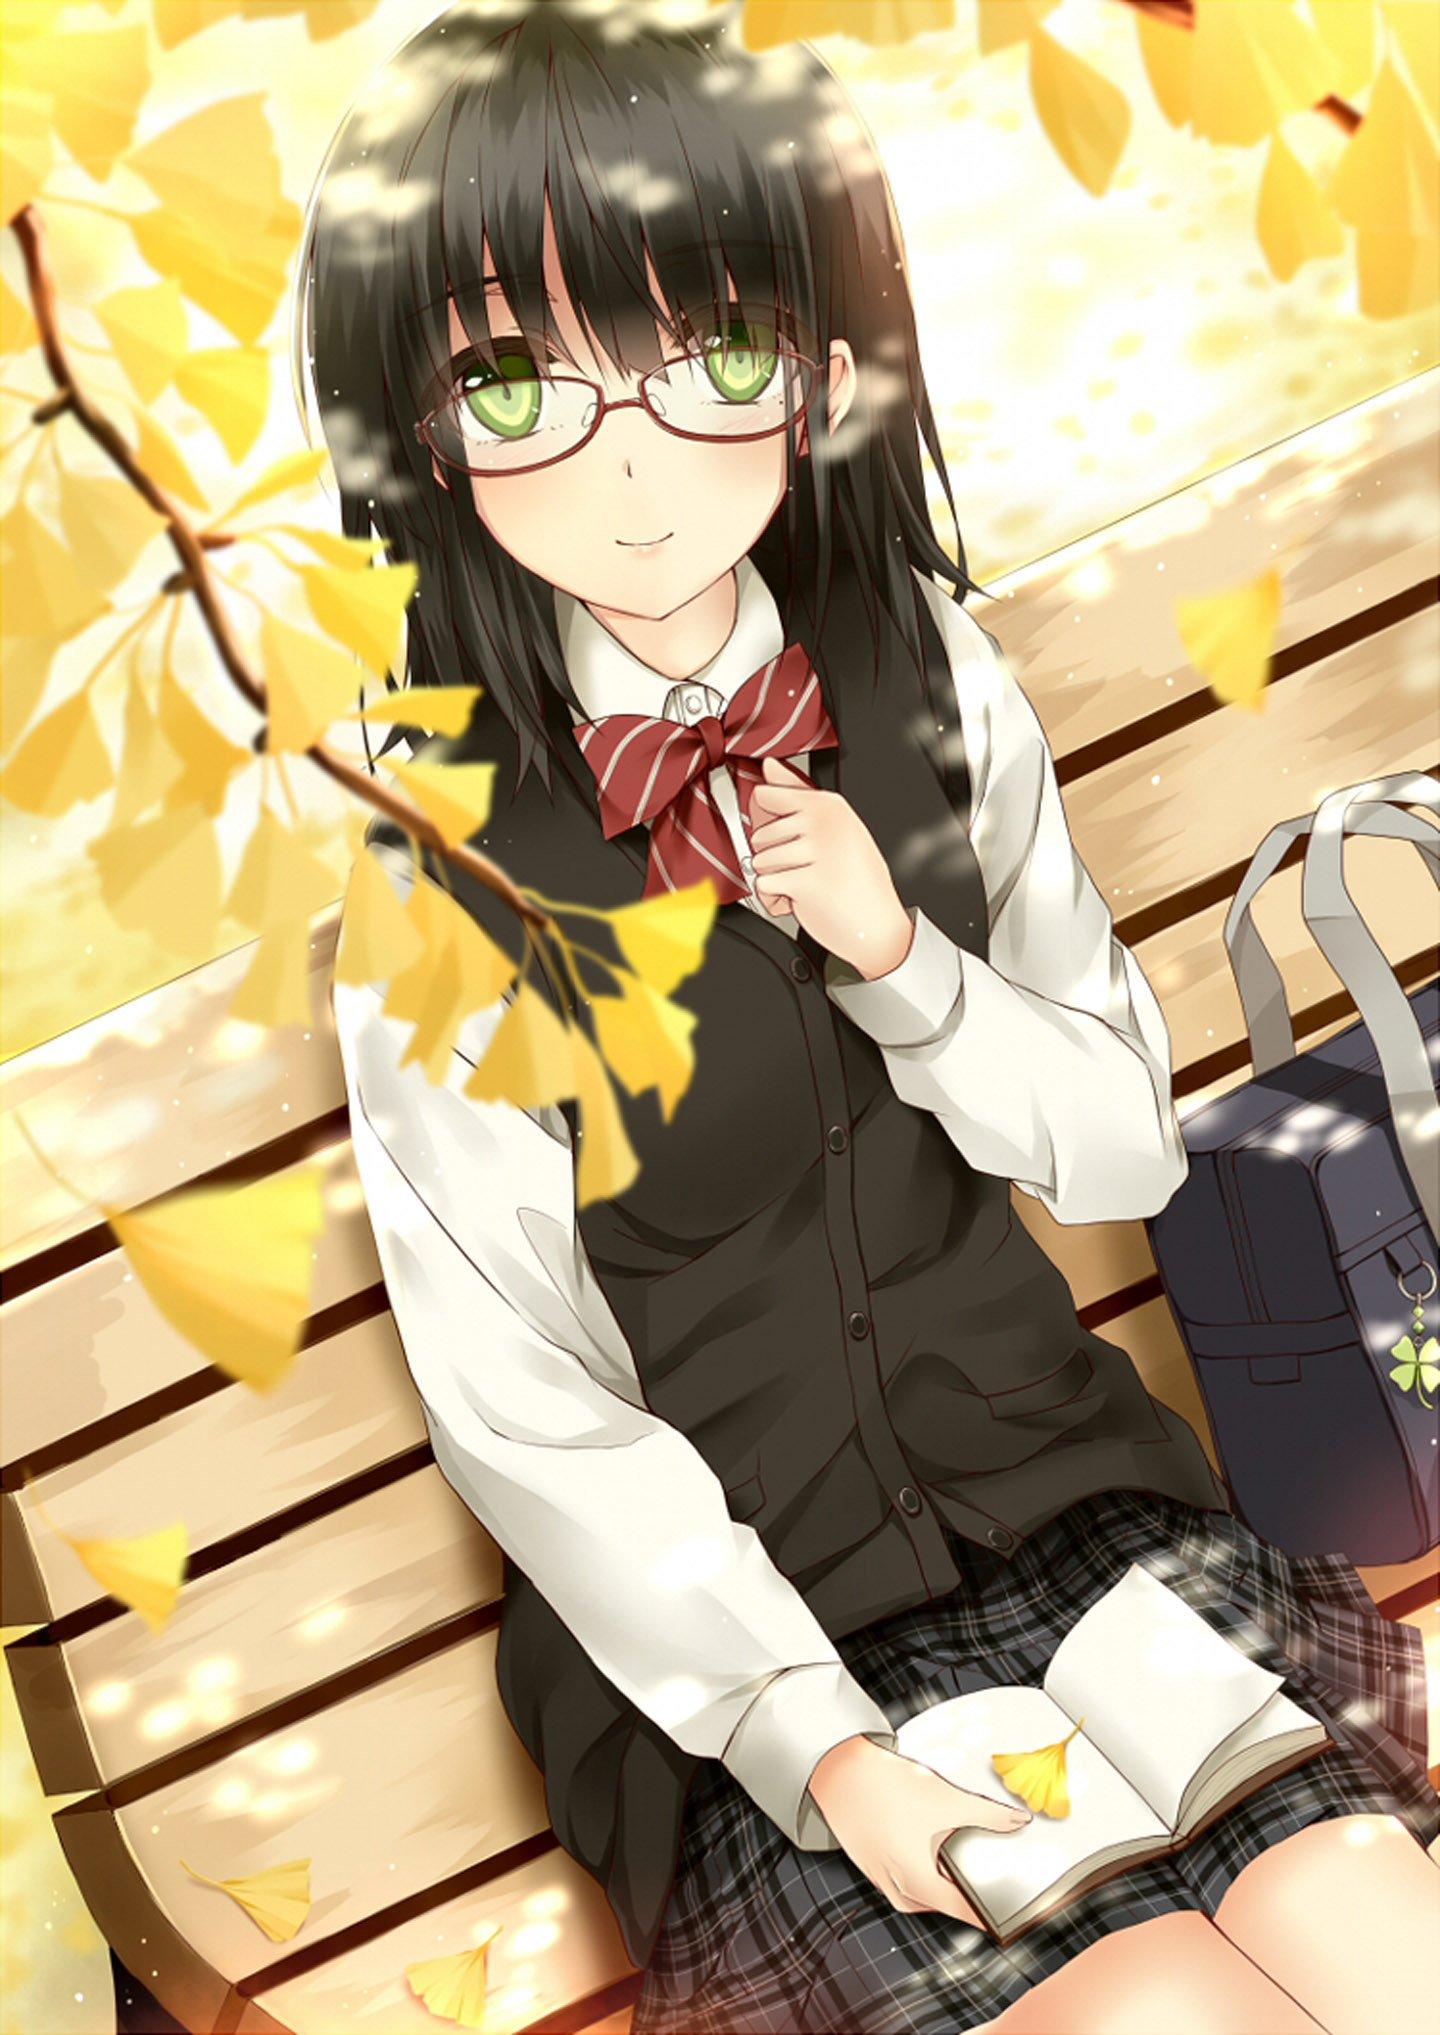 Original anime girl school uniform autumn leaves cute beautiful